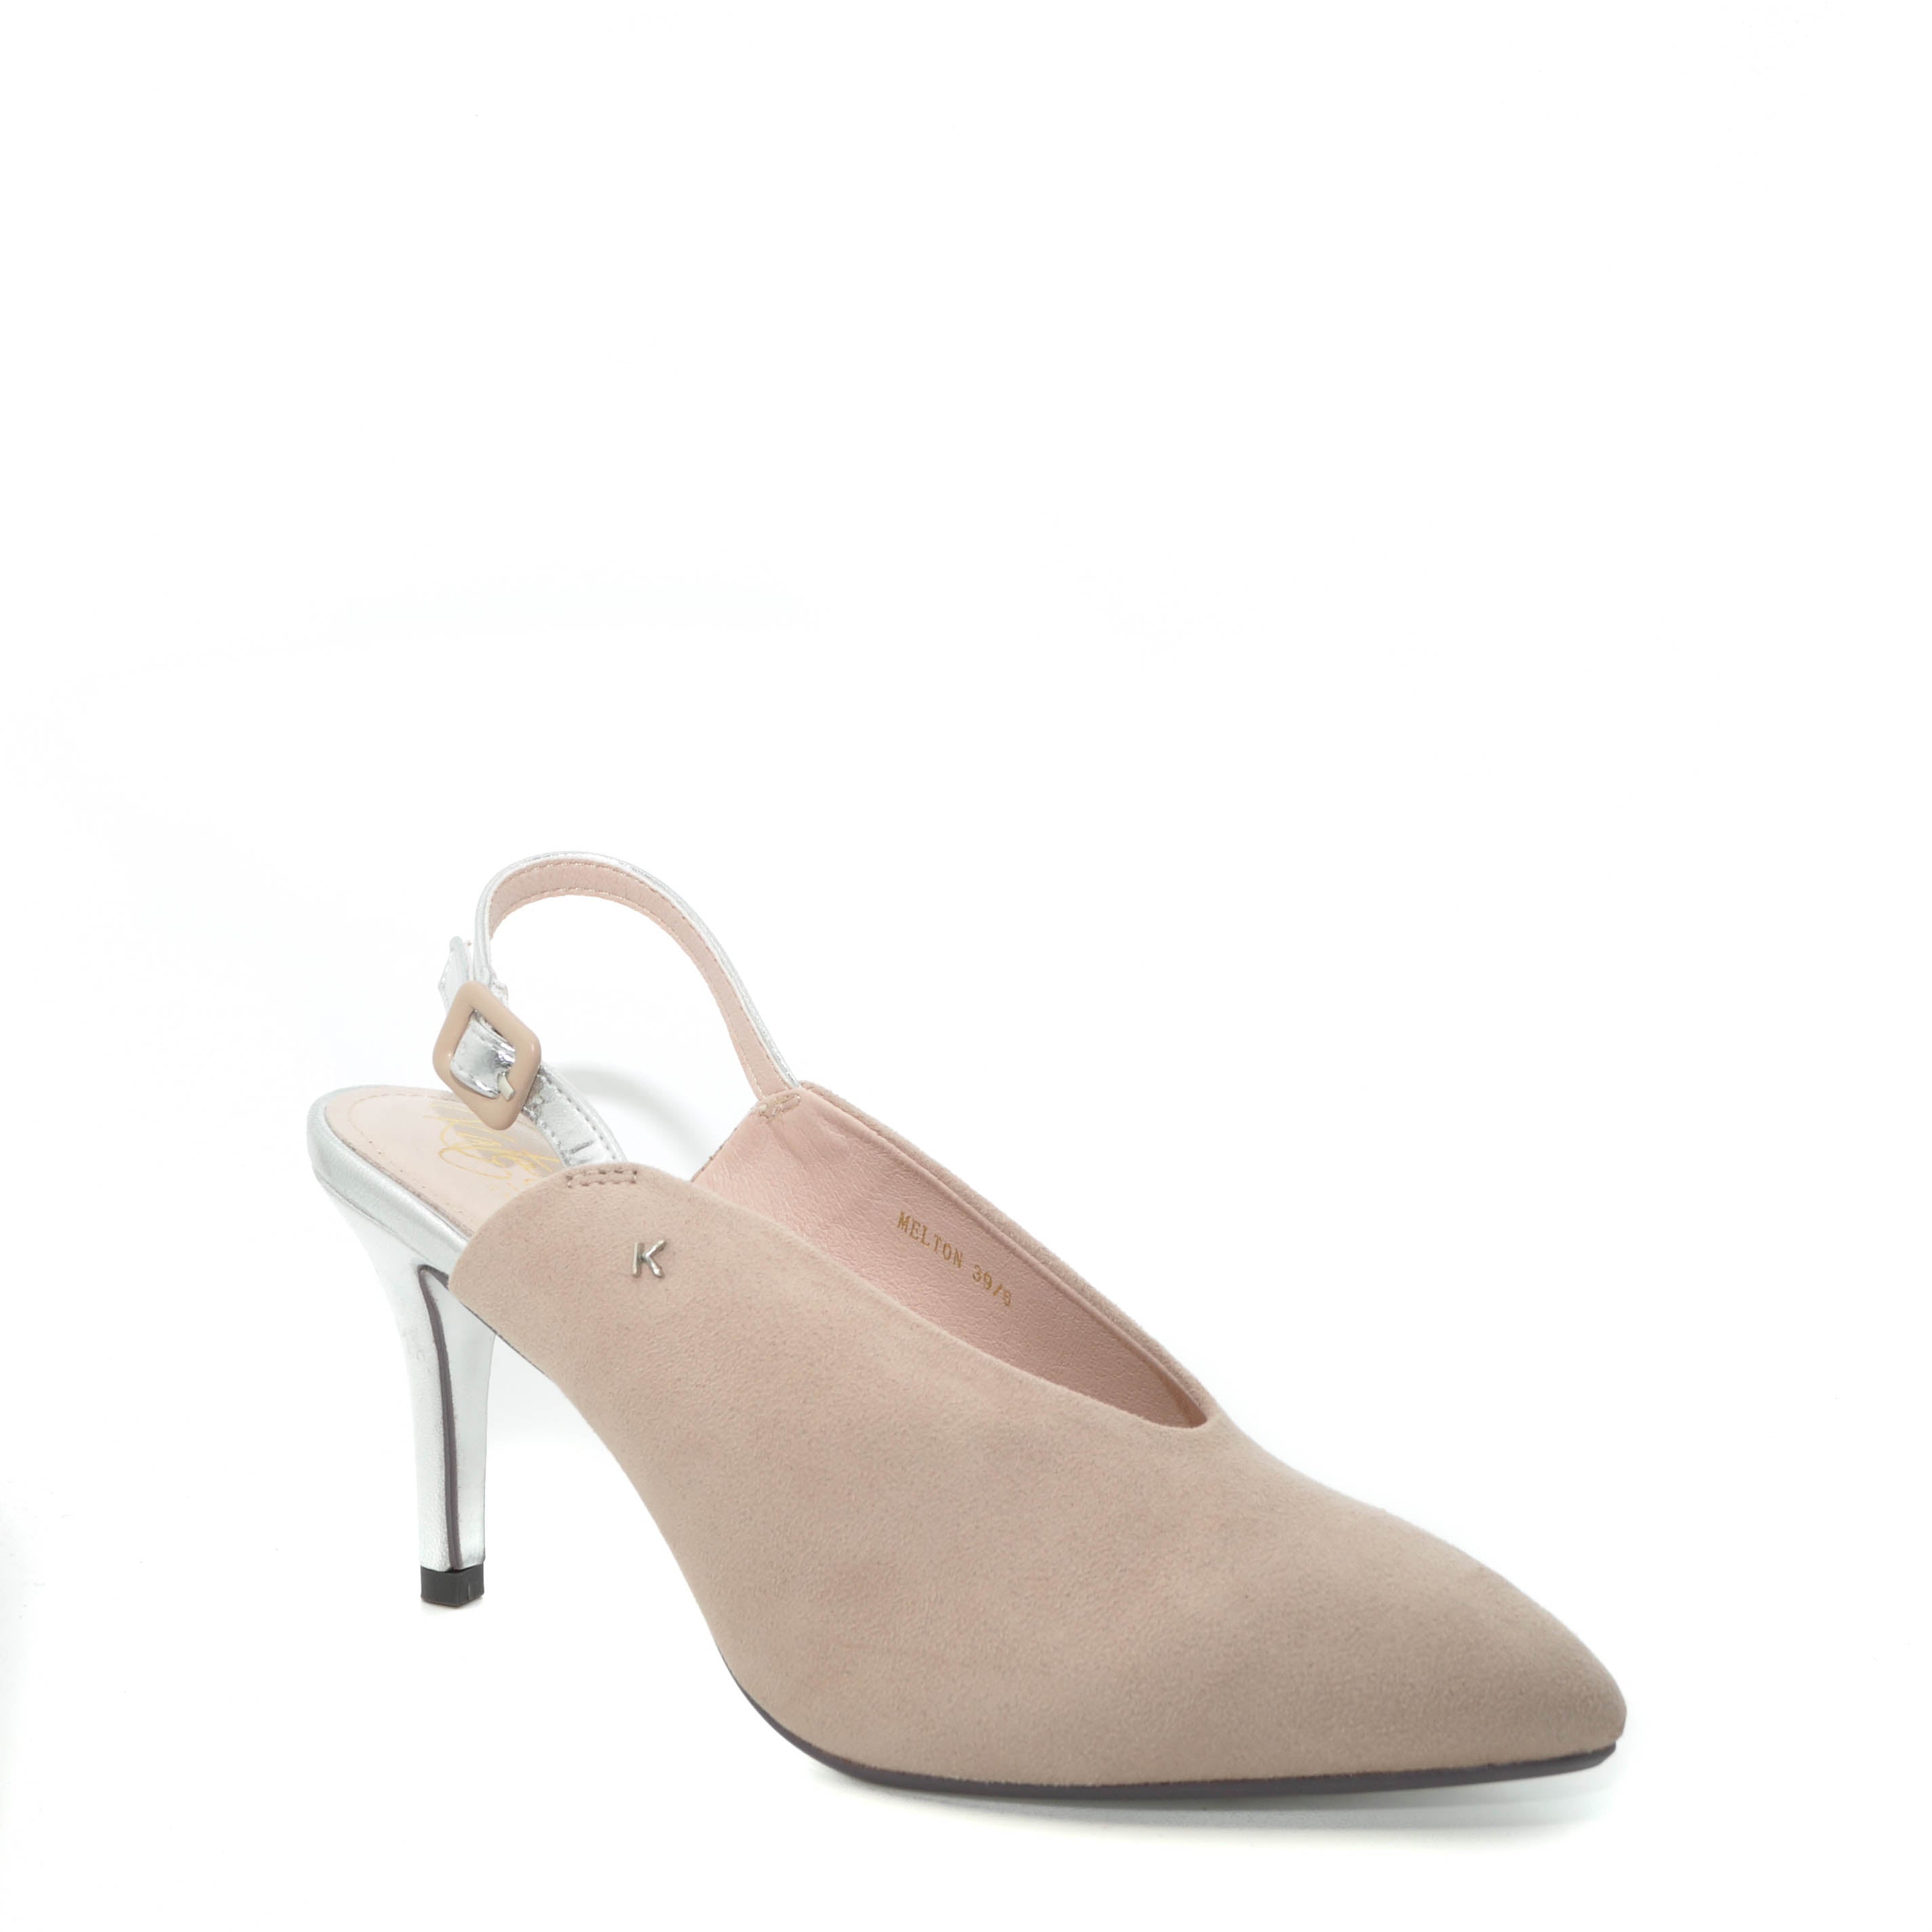 Kate appleby pink sling back heels